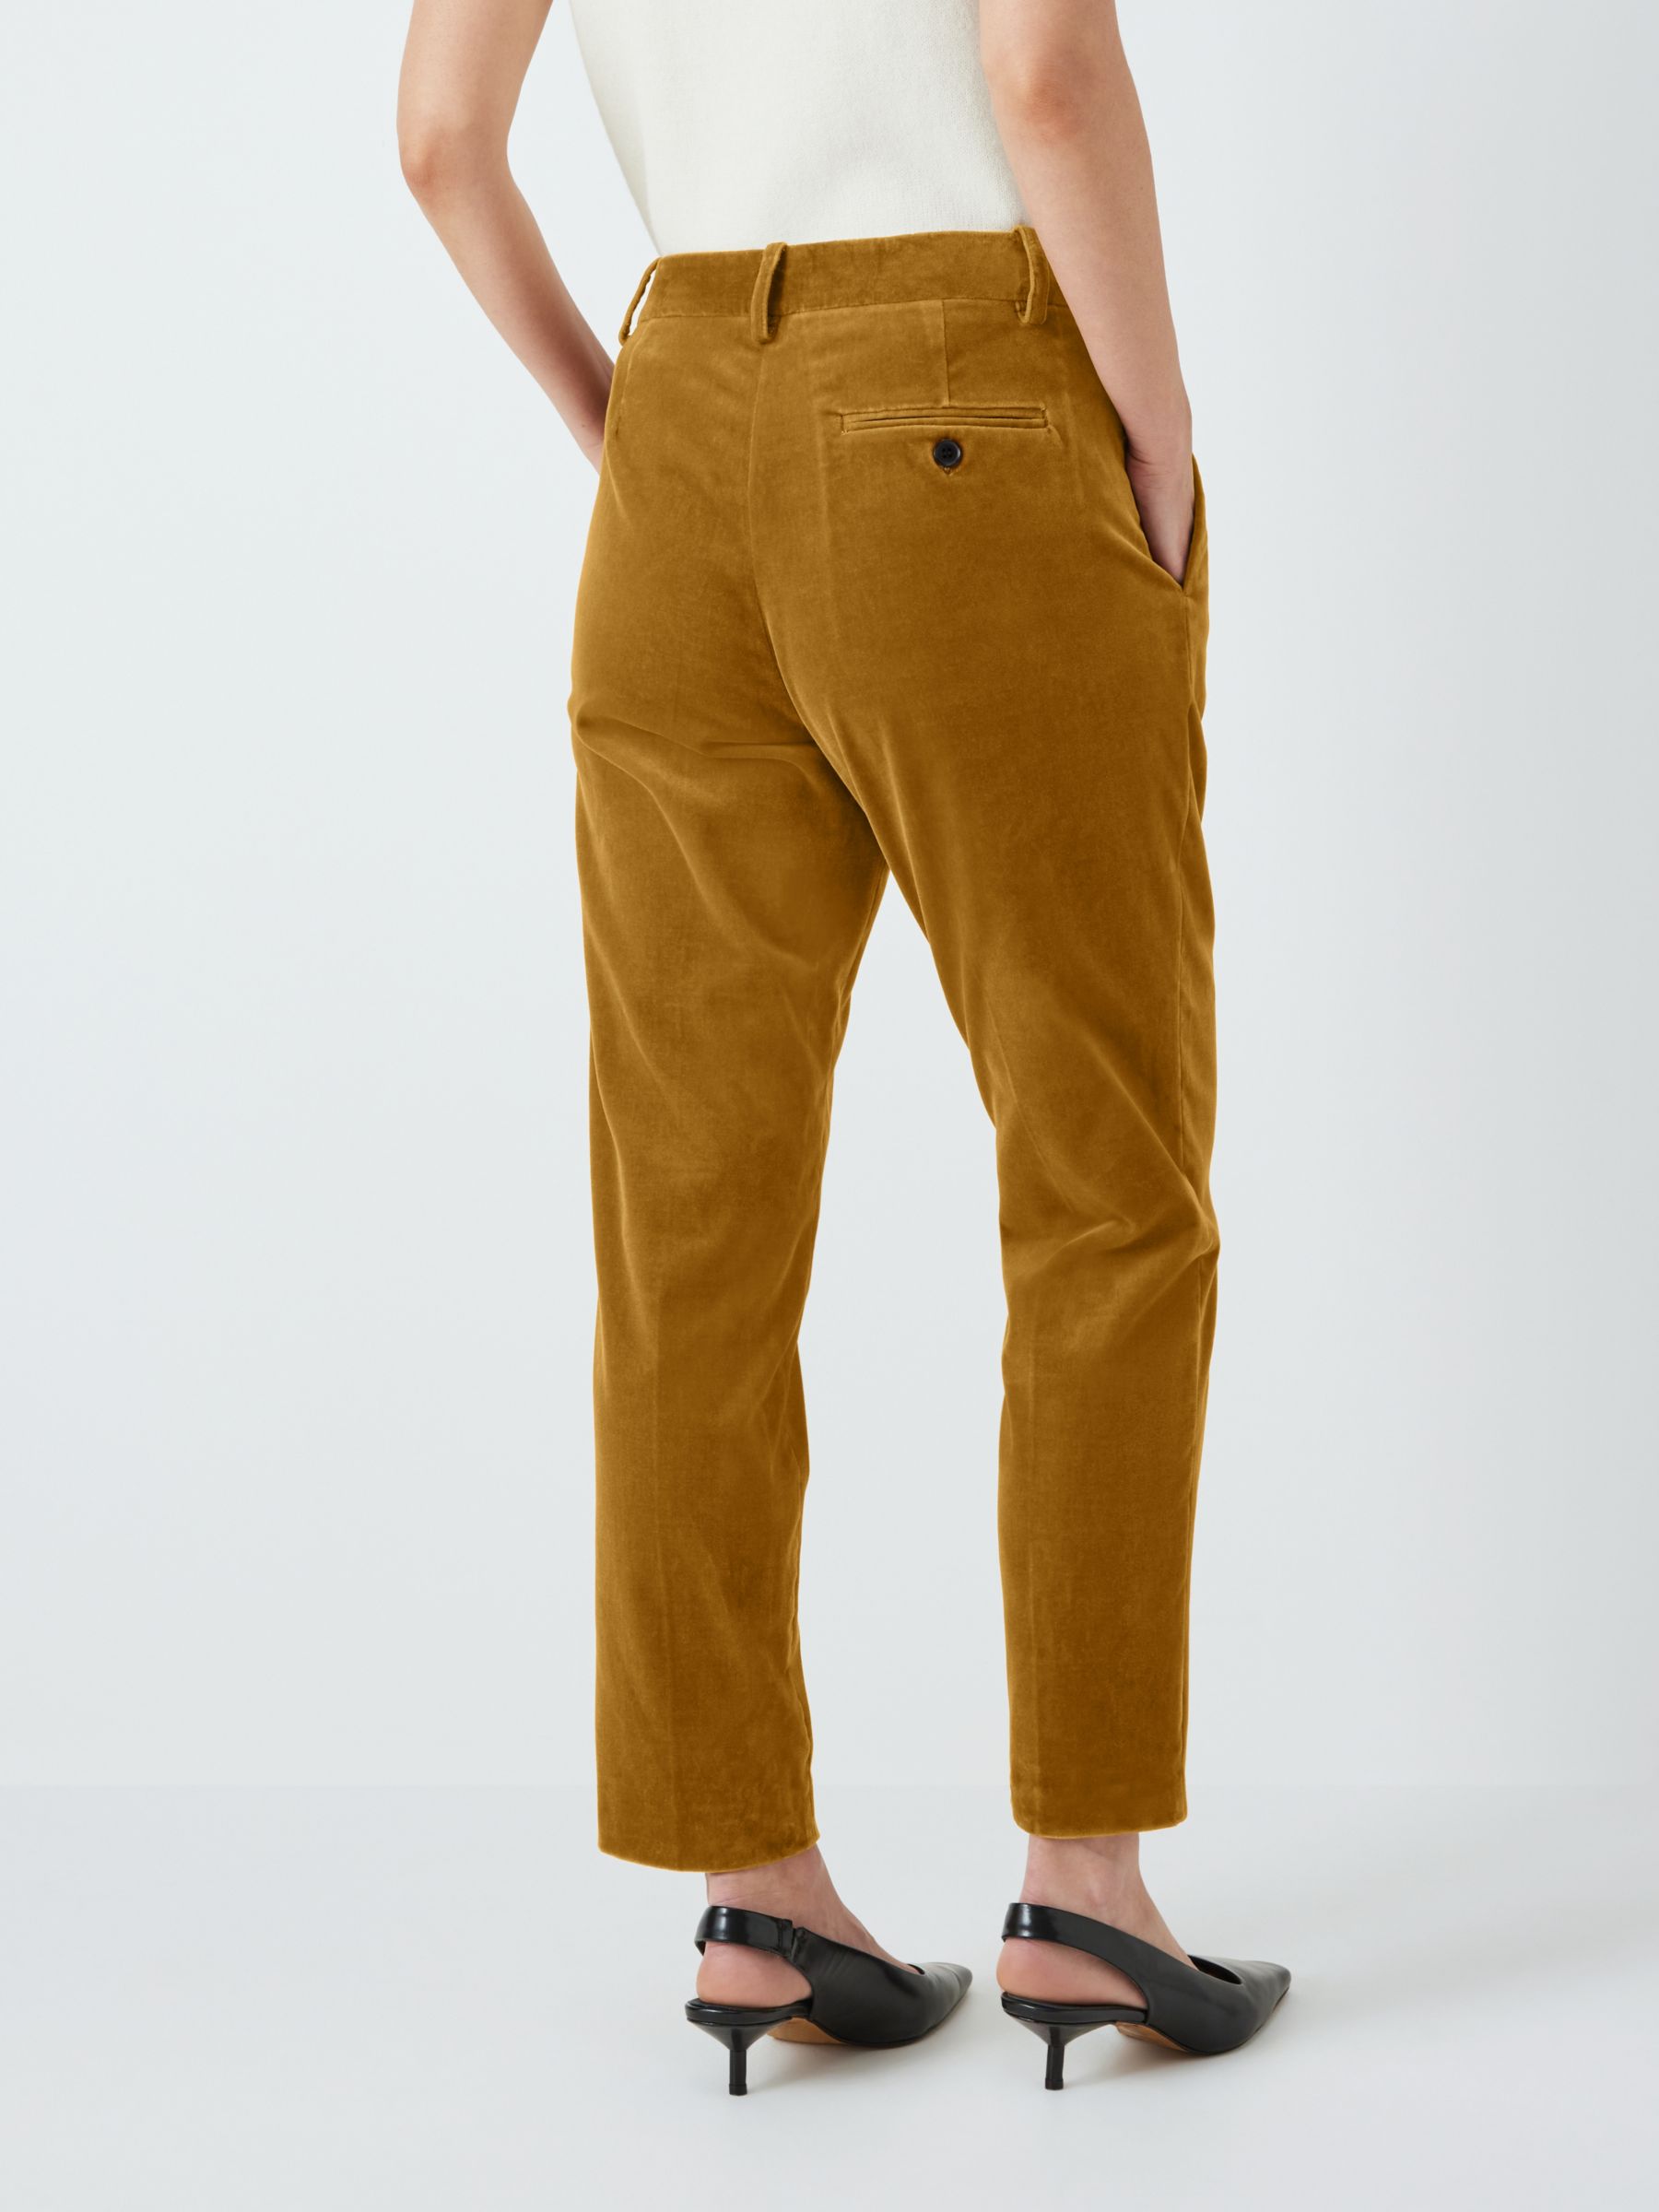 SOEUR Vianney Smooth Velvet Trousers, Bronze at John Lewis & Partners